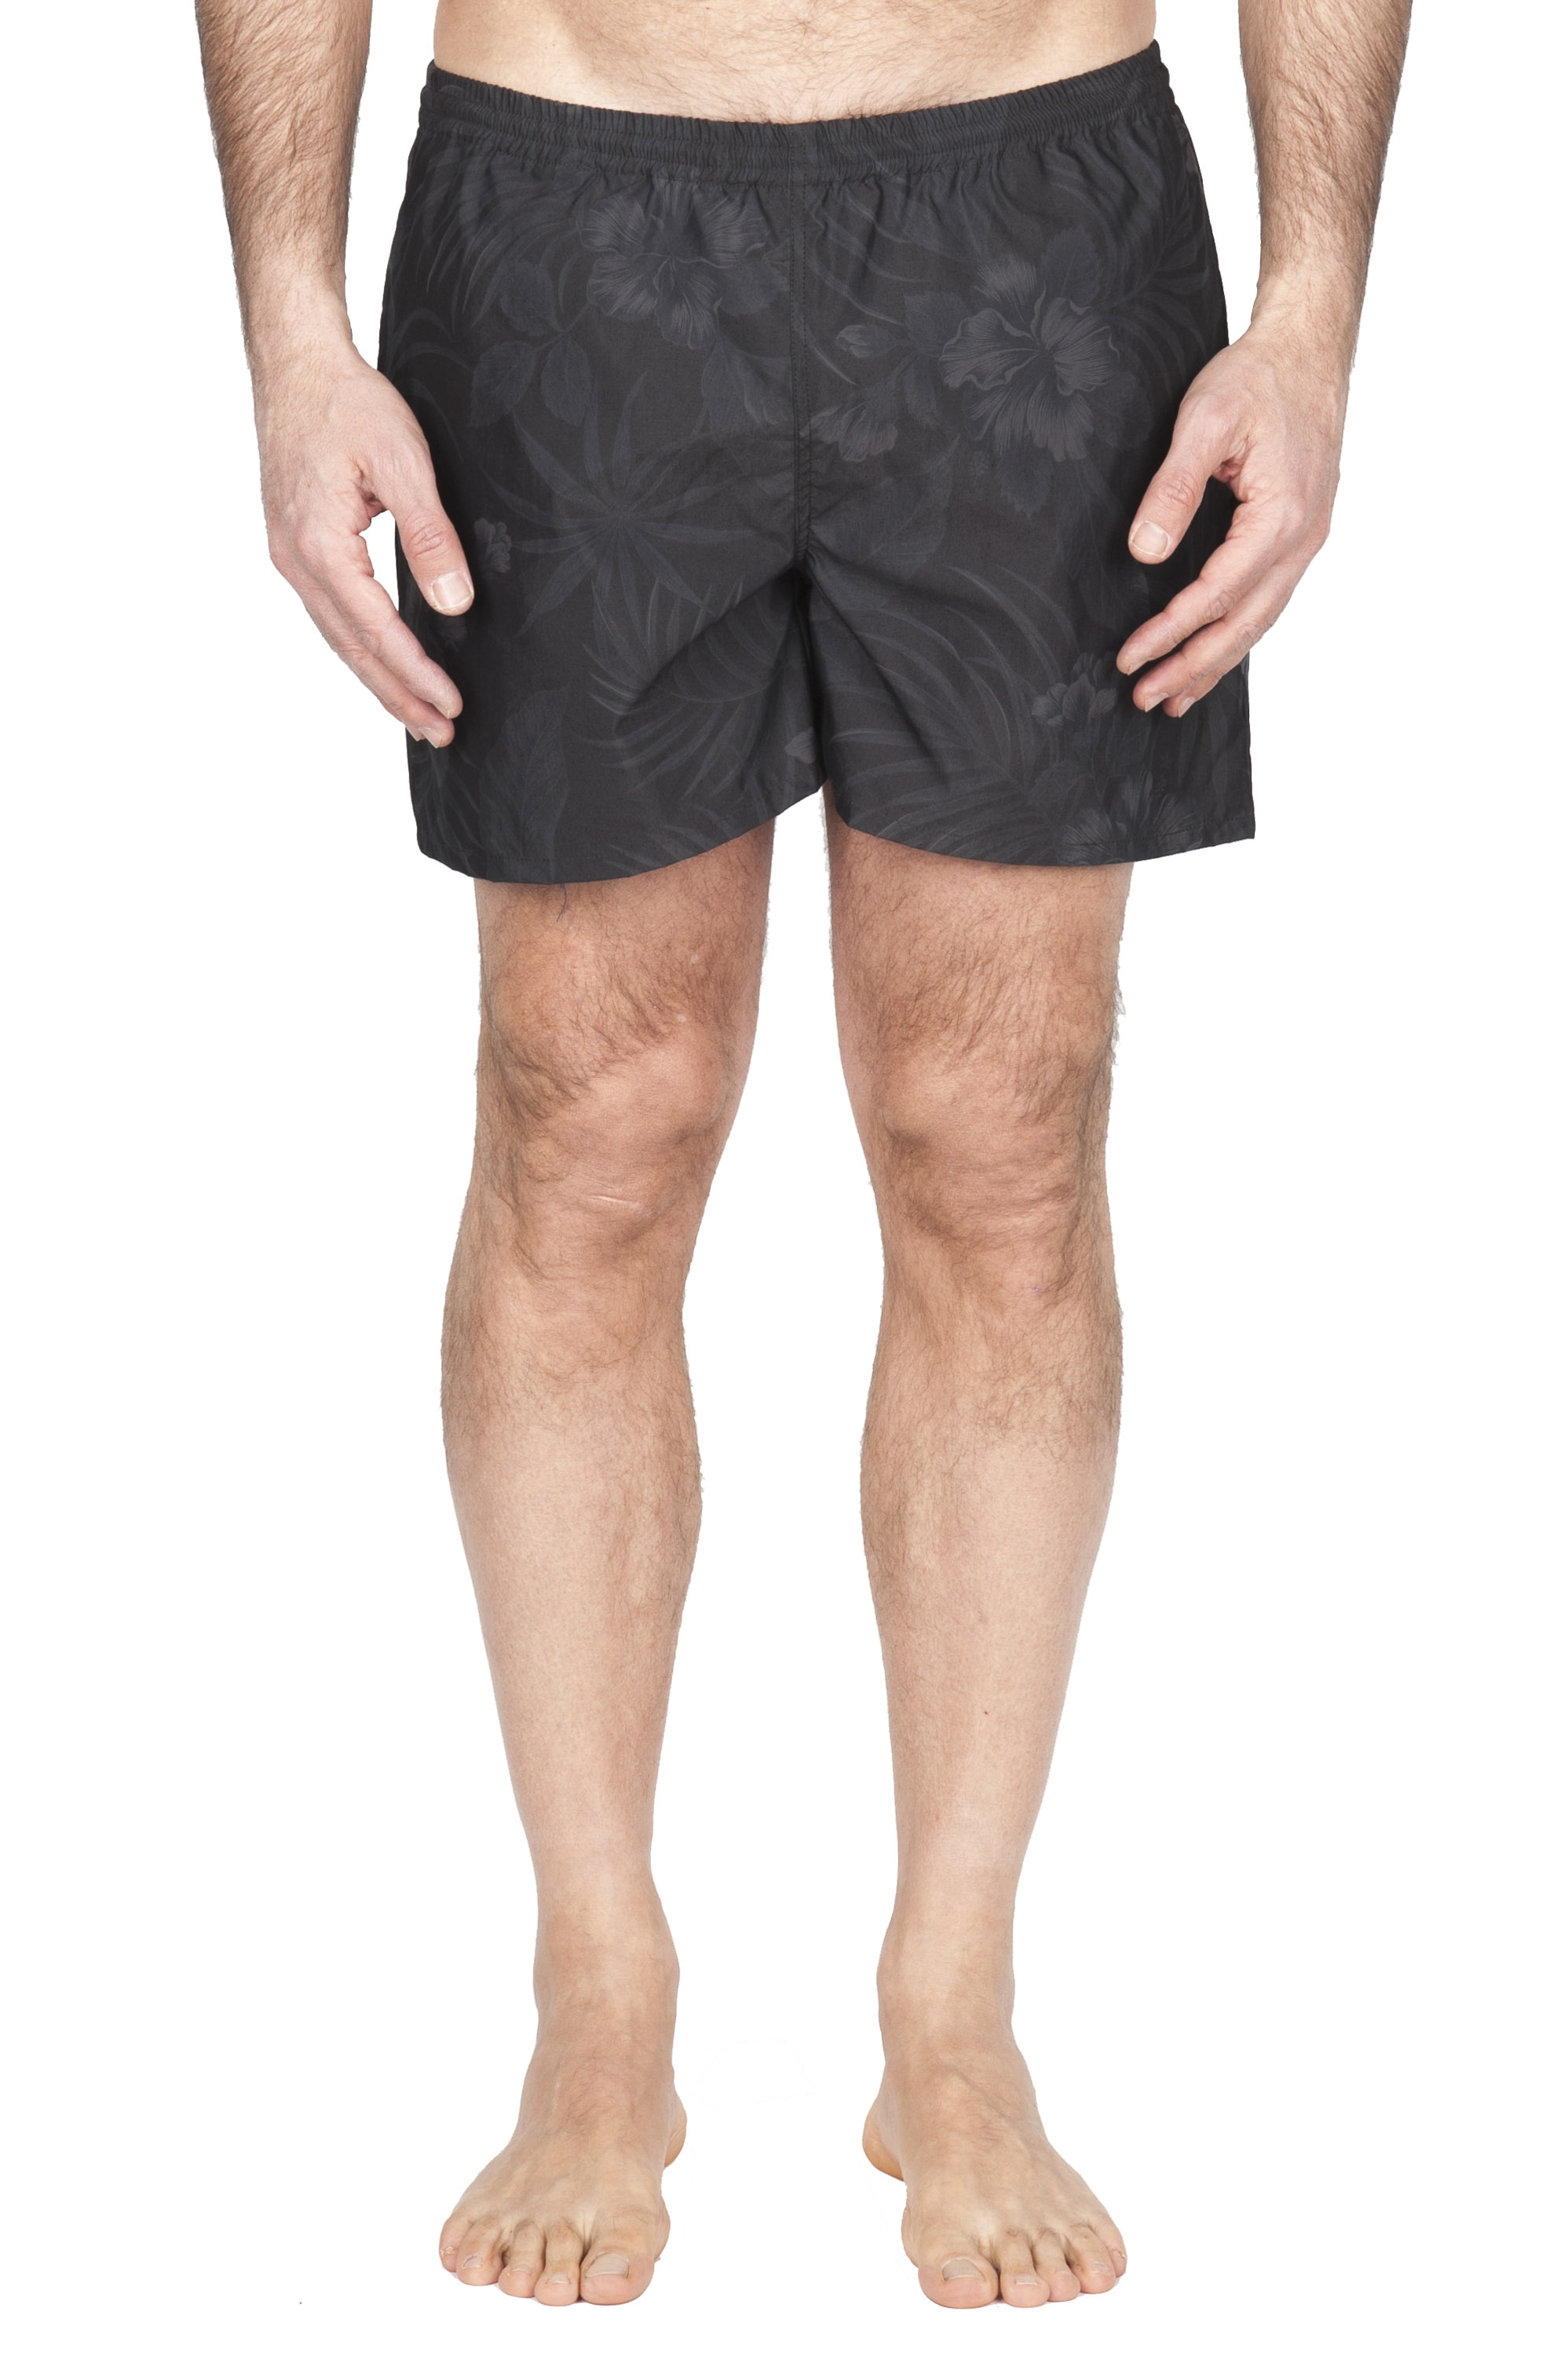 SBU 01762 Tactical swimsuit trunks in black floral print ultra-lightweight nylon 01